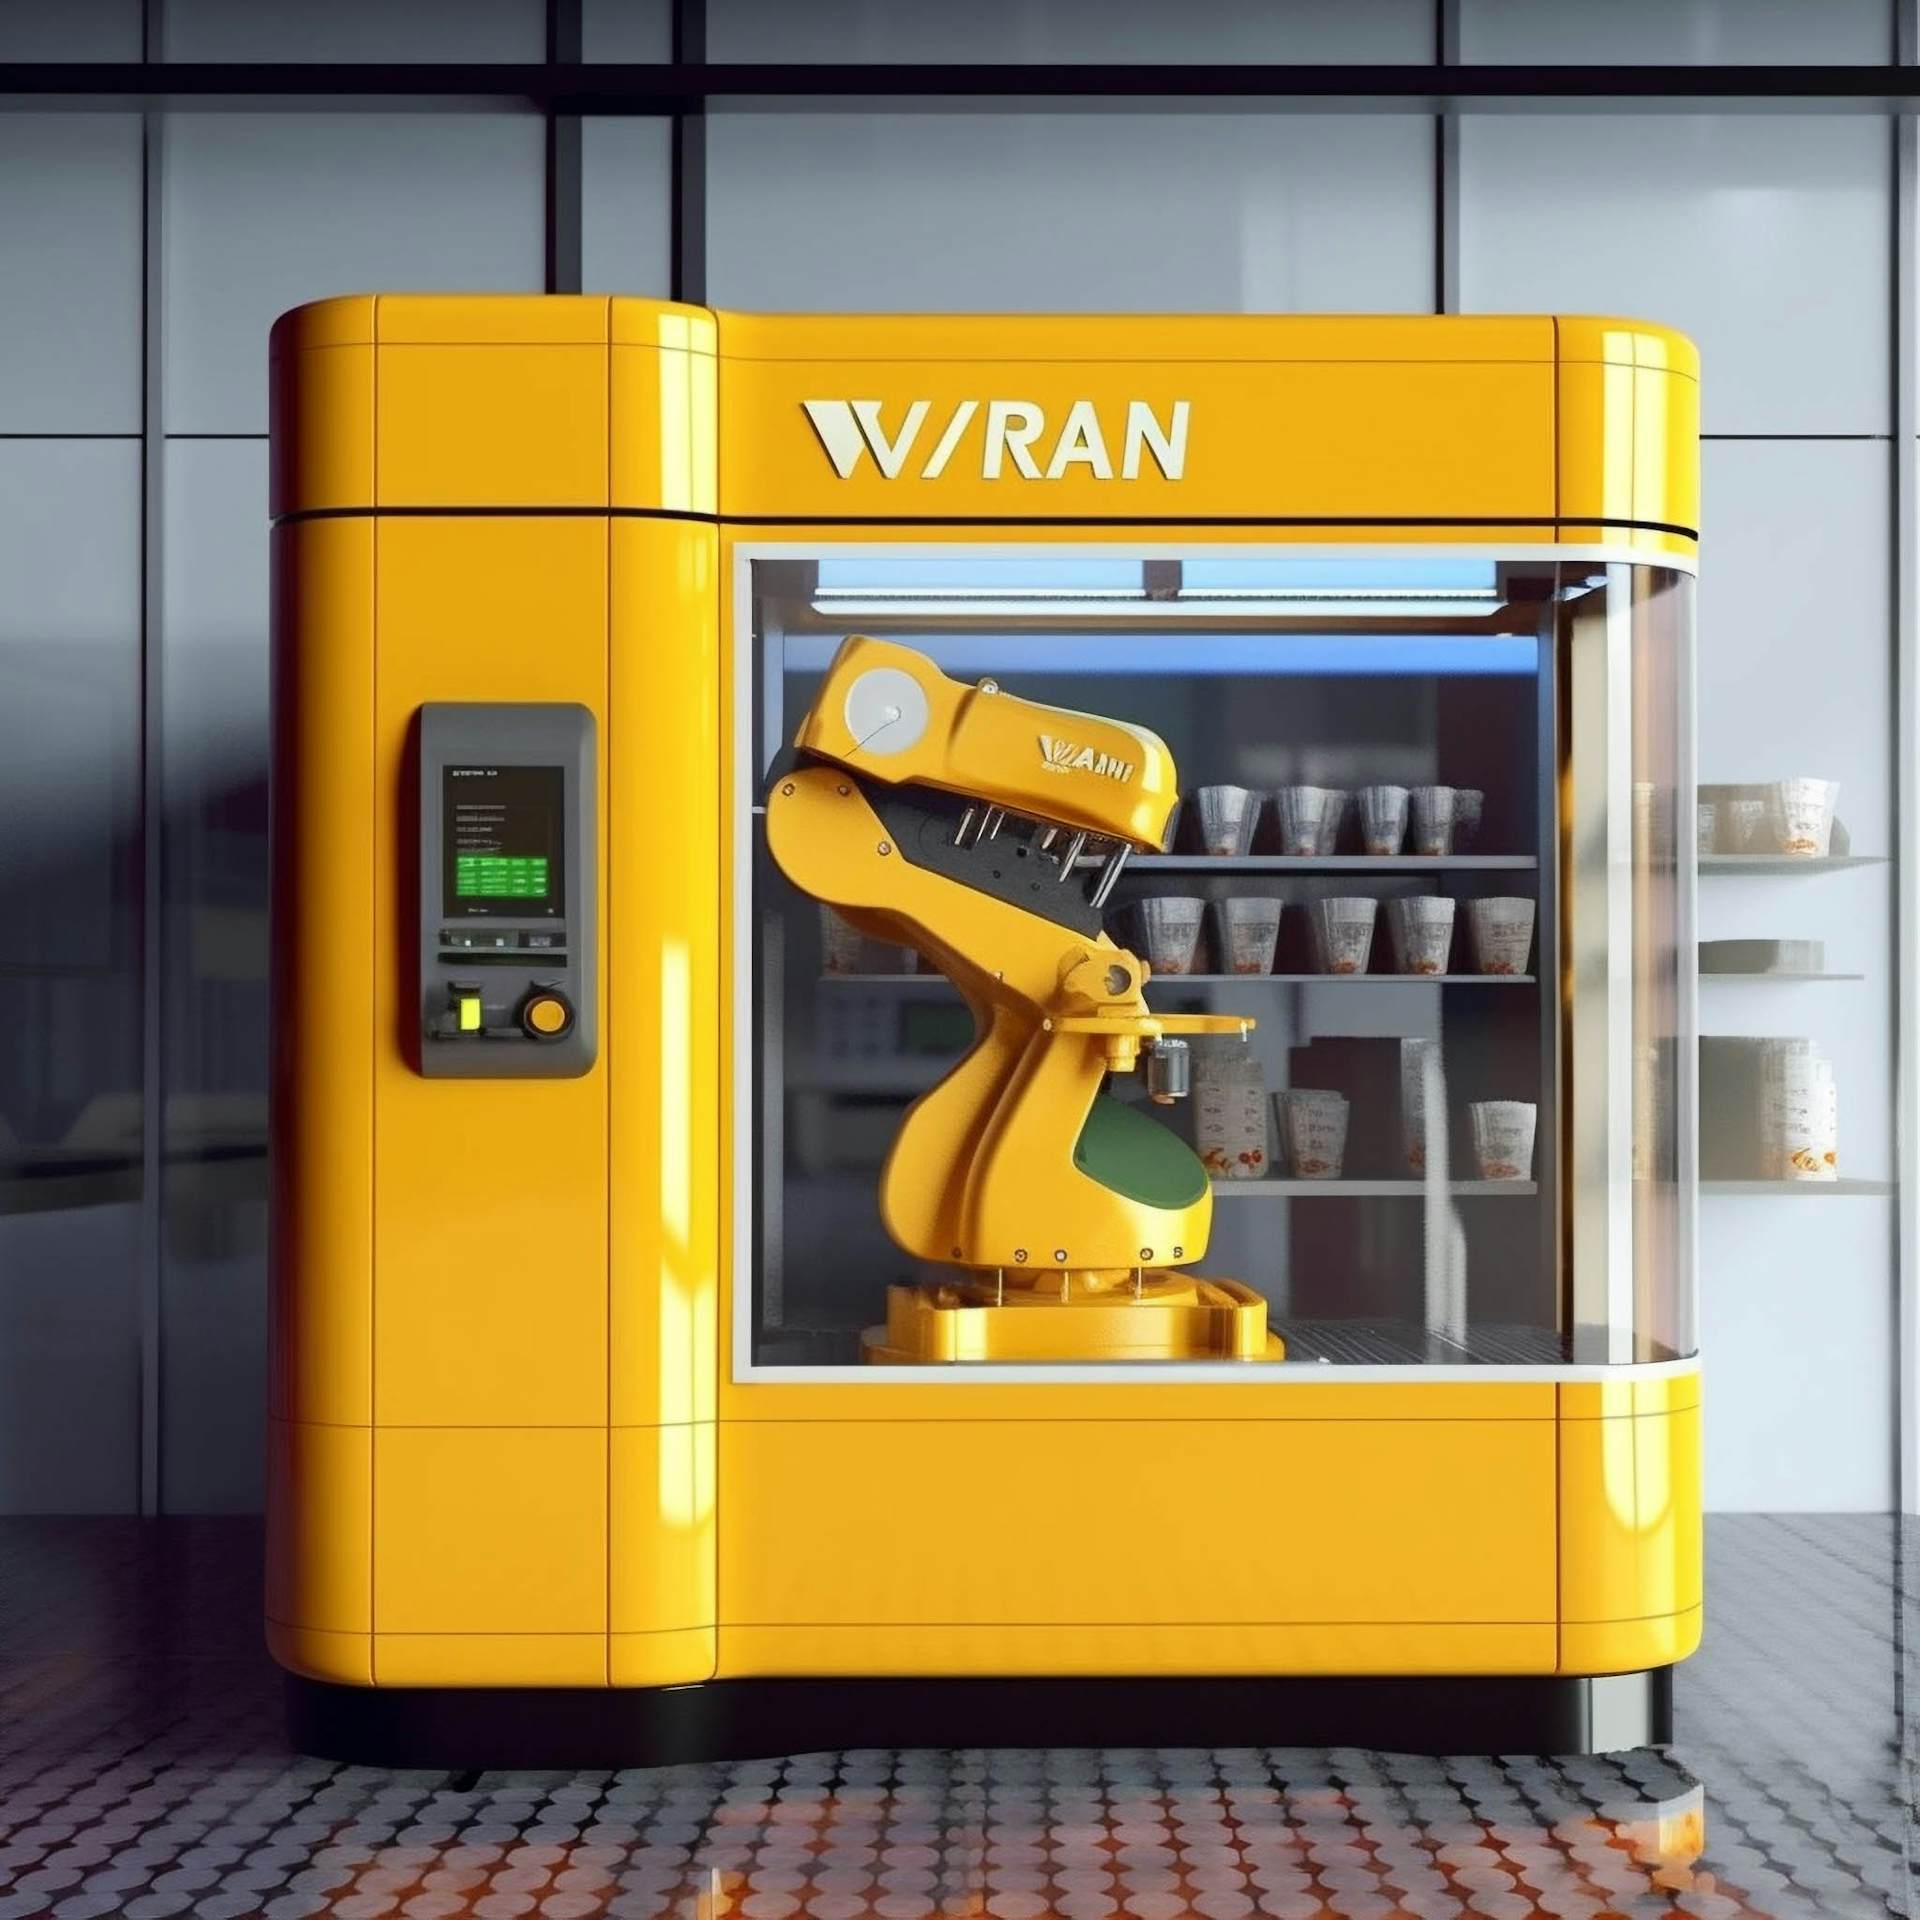 Robot arm makes coffee